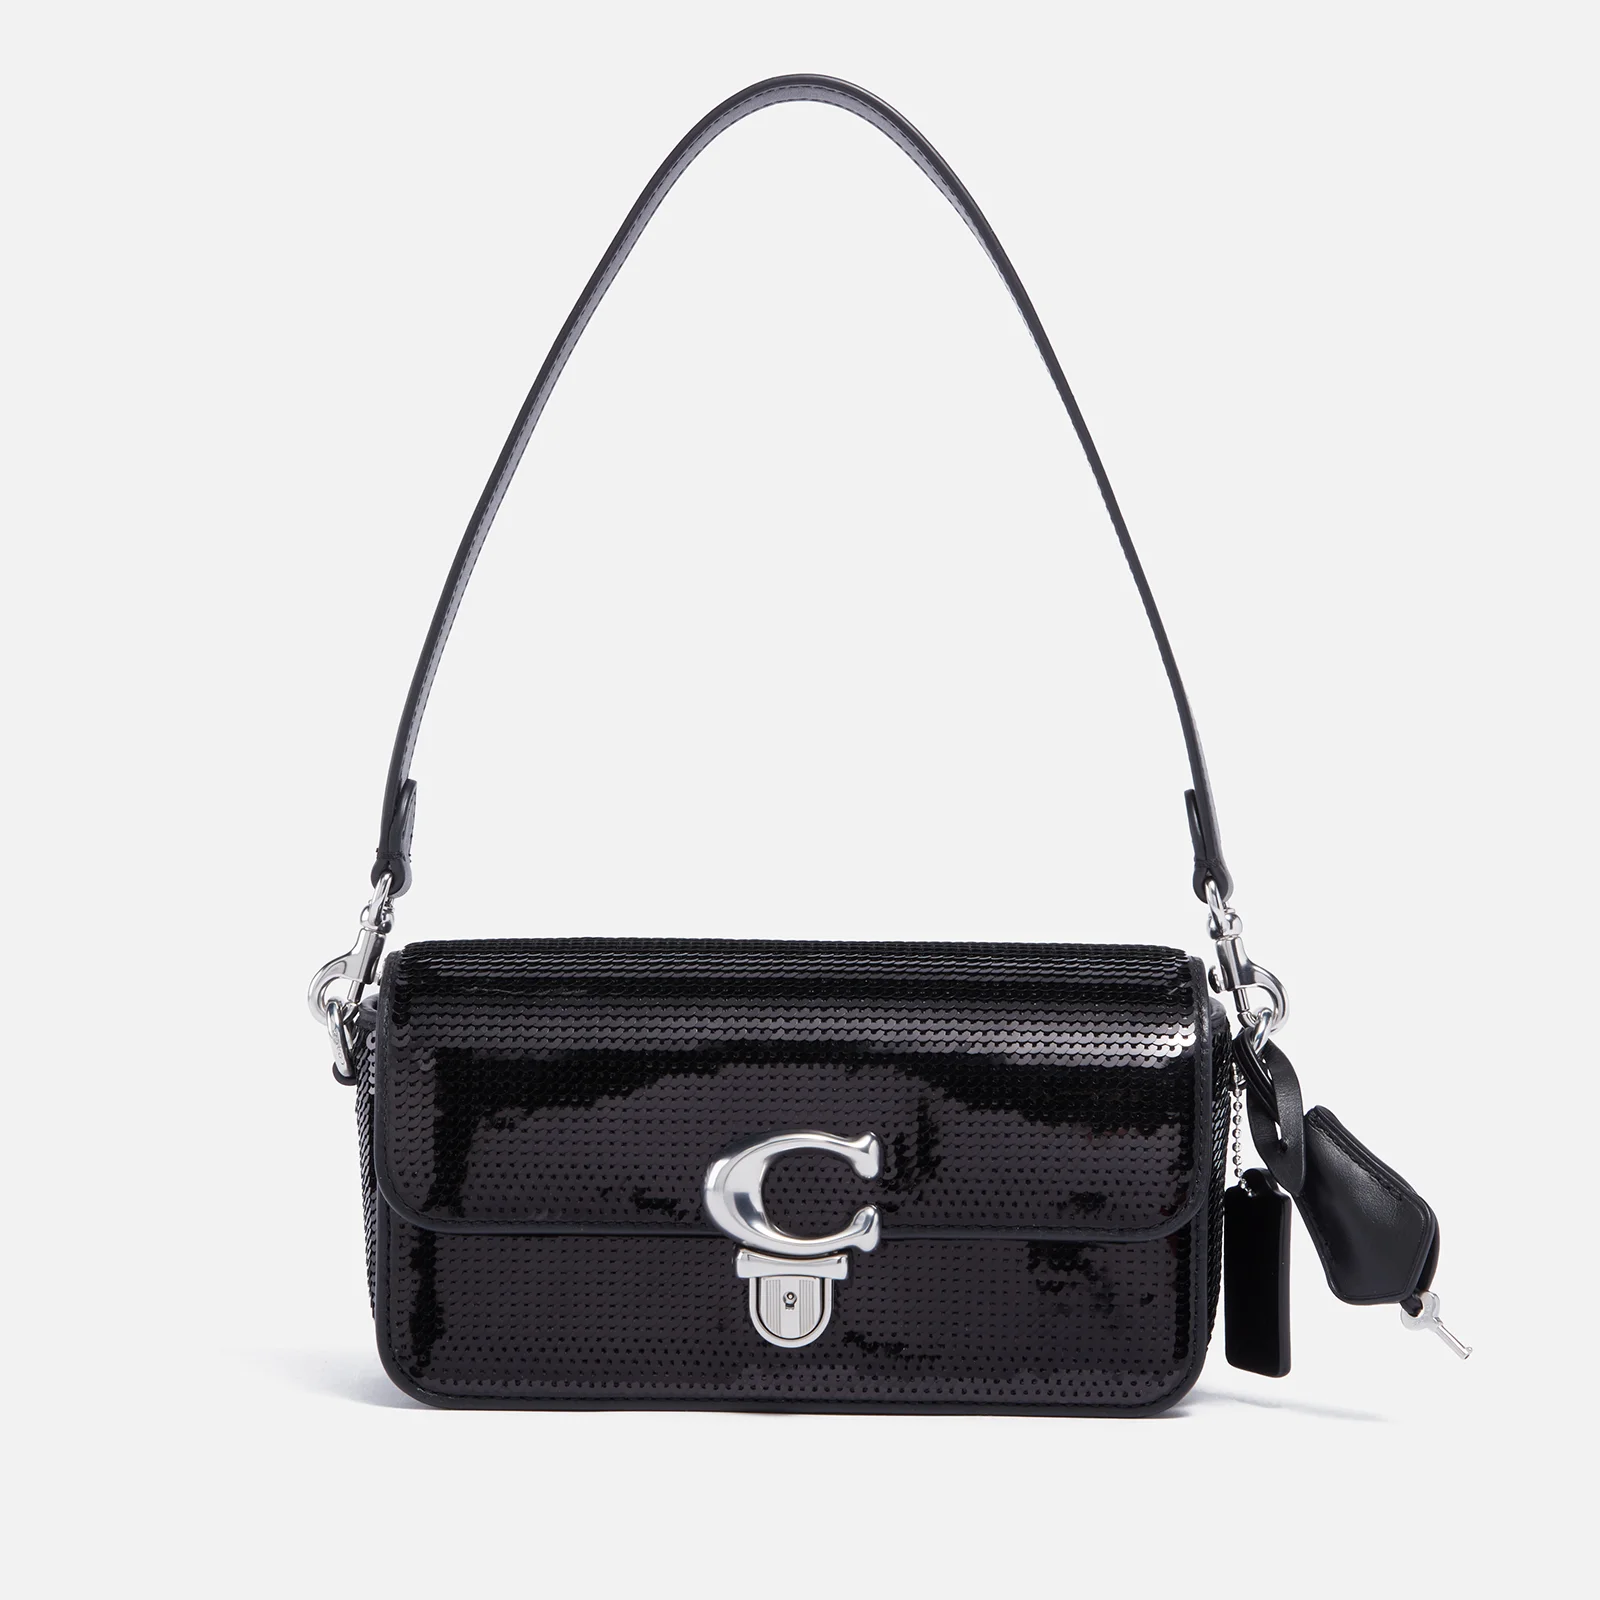 Coach Studio Sequinned Leather Baguette Bag Image 1